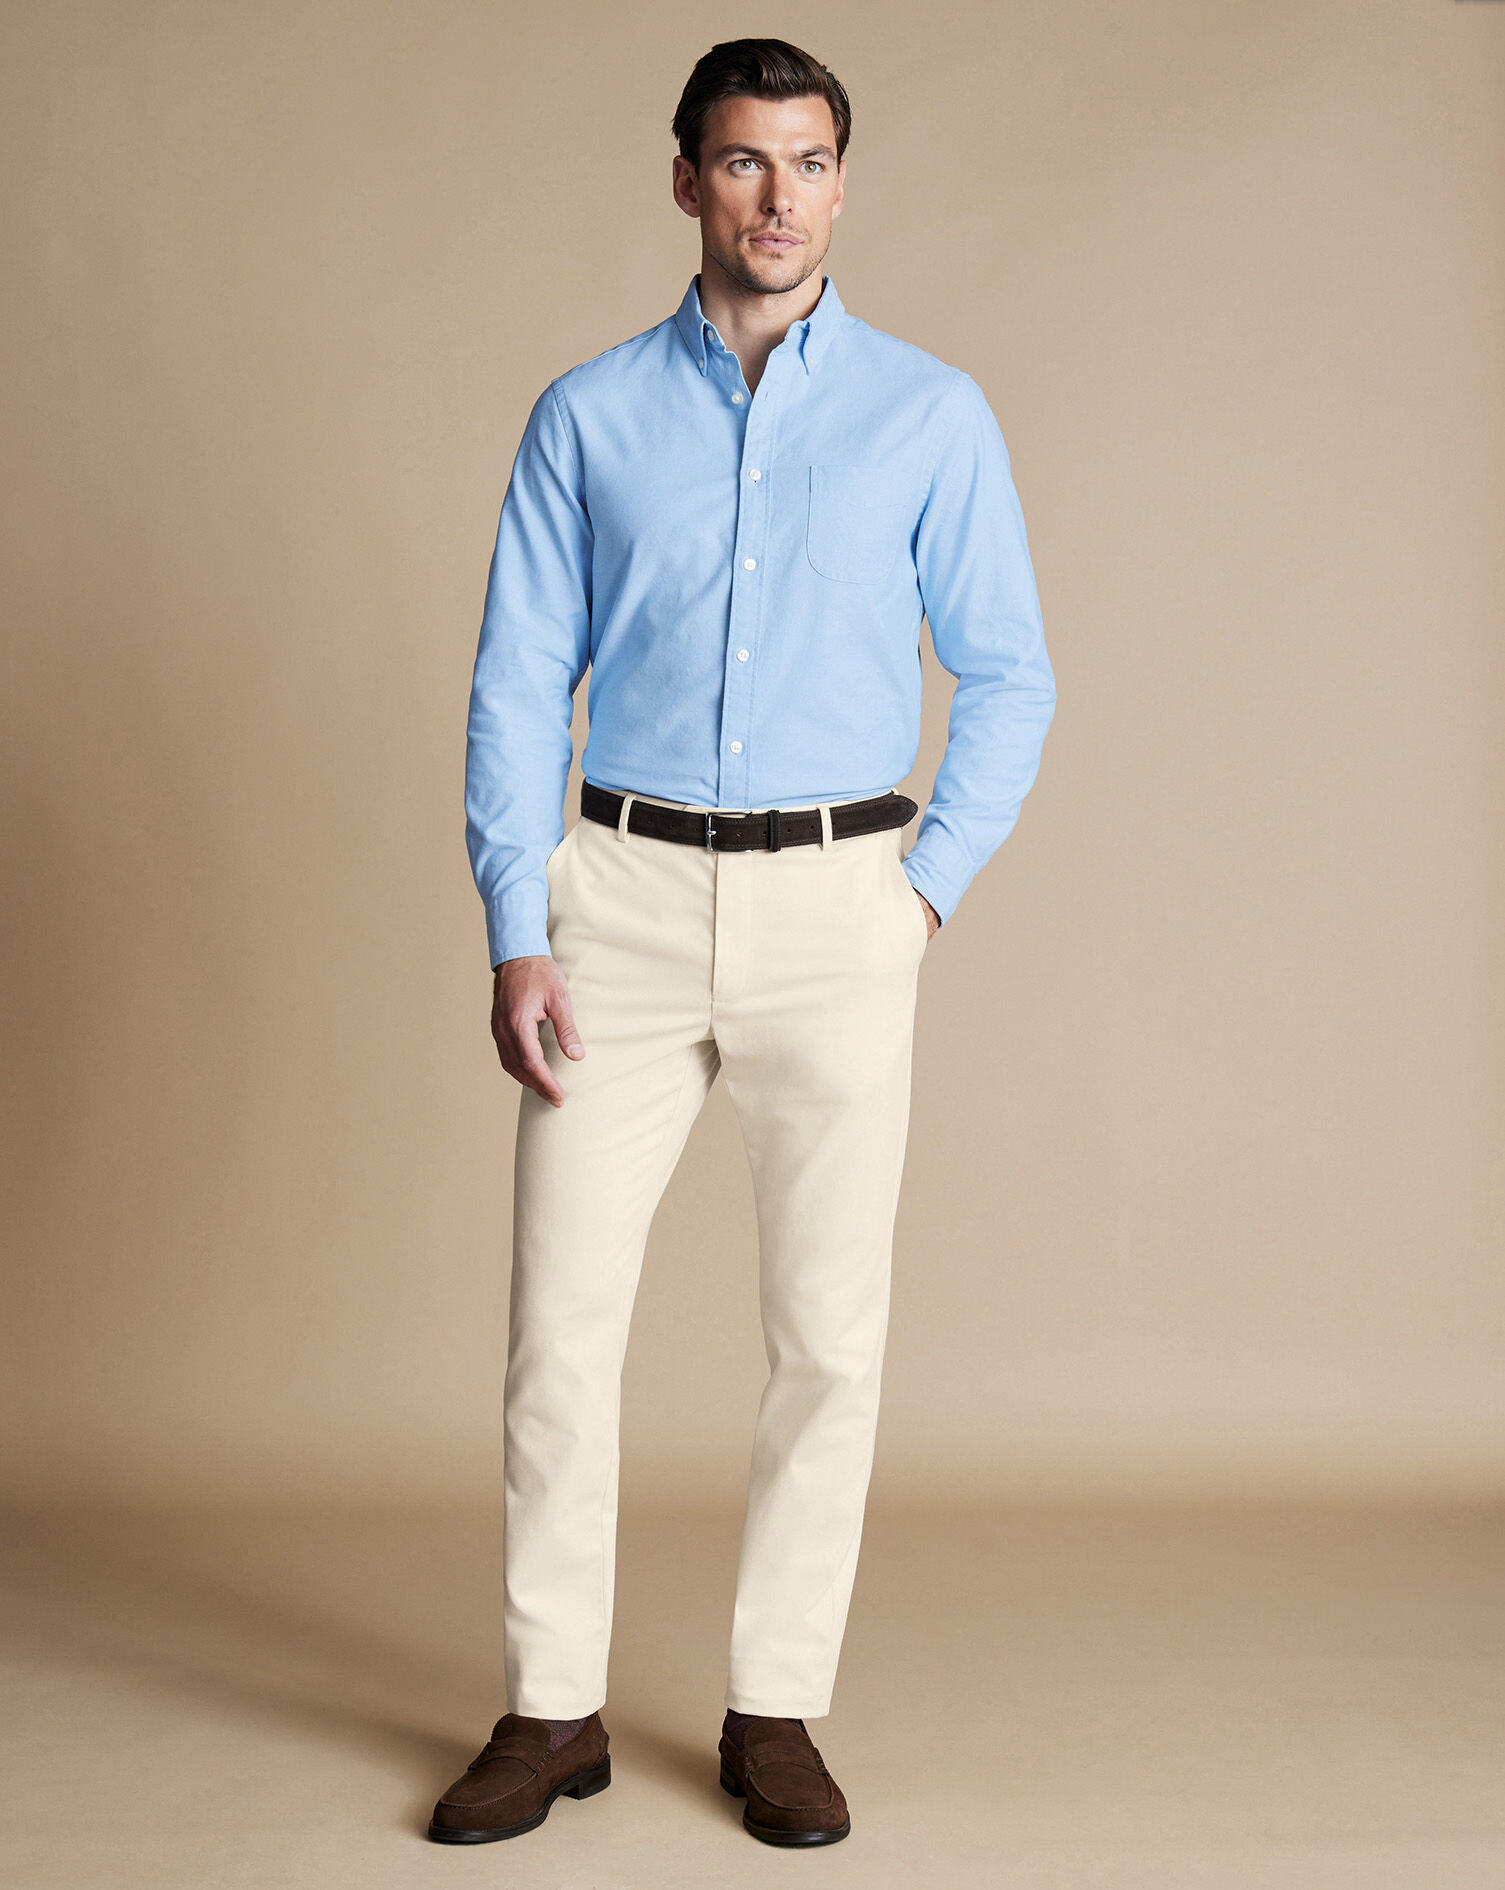 Light Blue Pant Matching Shirt || Light Blue Pants Combination Shirts -  YouTube